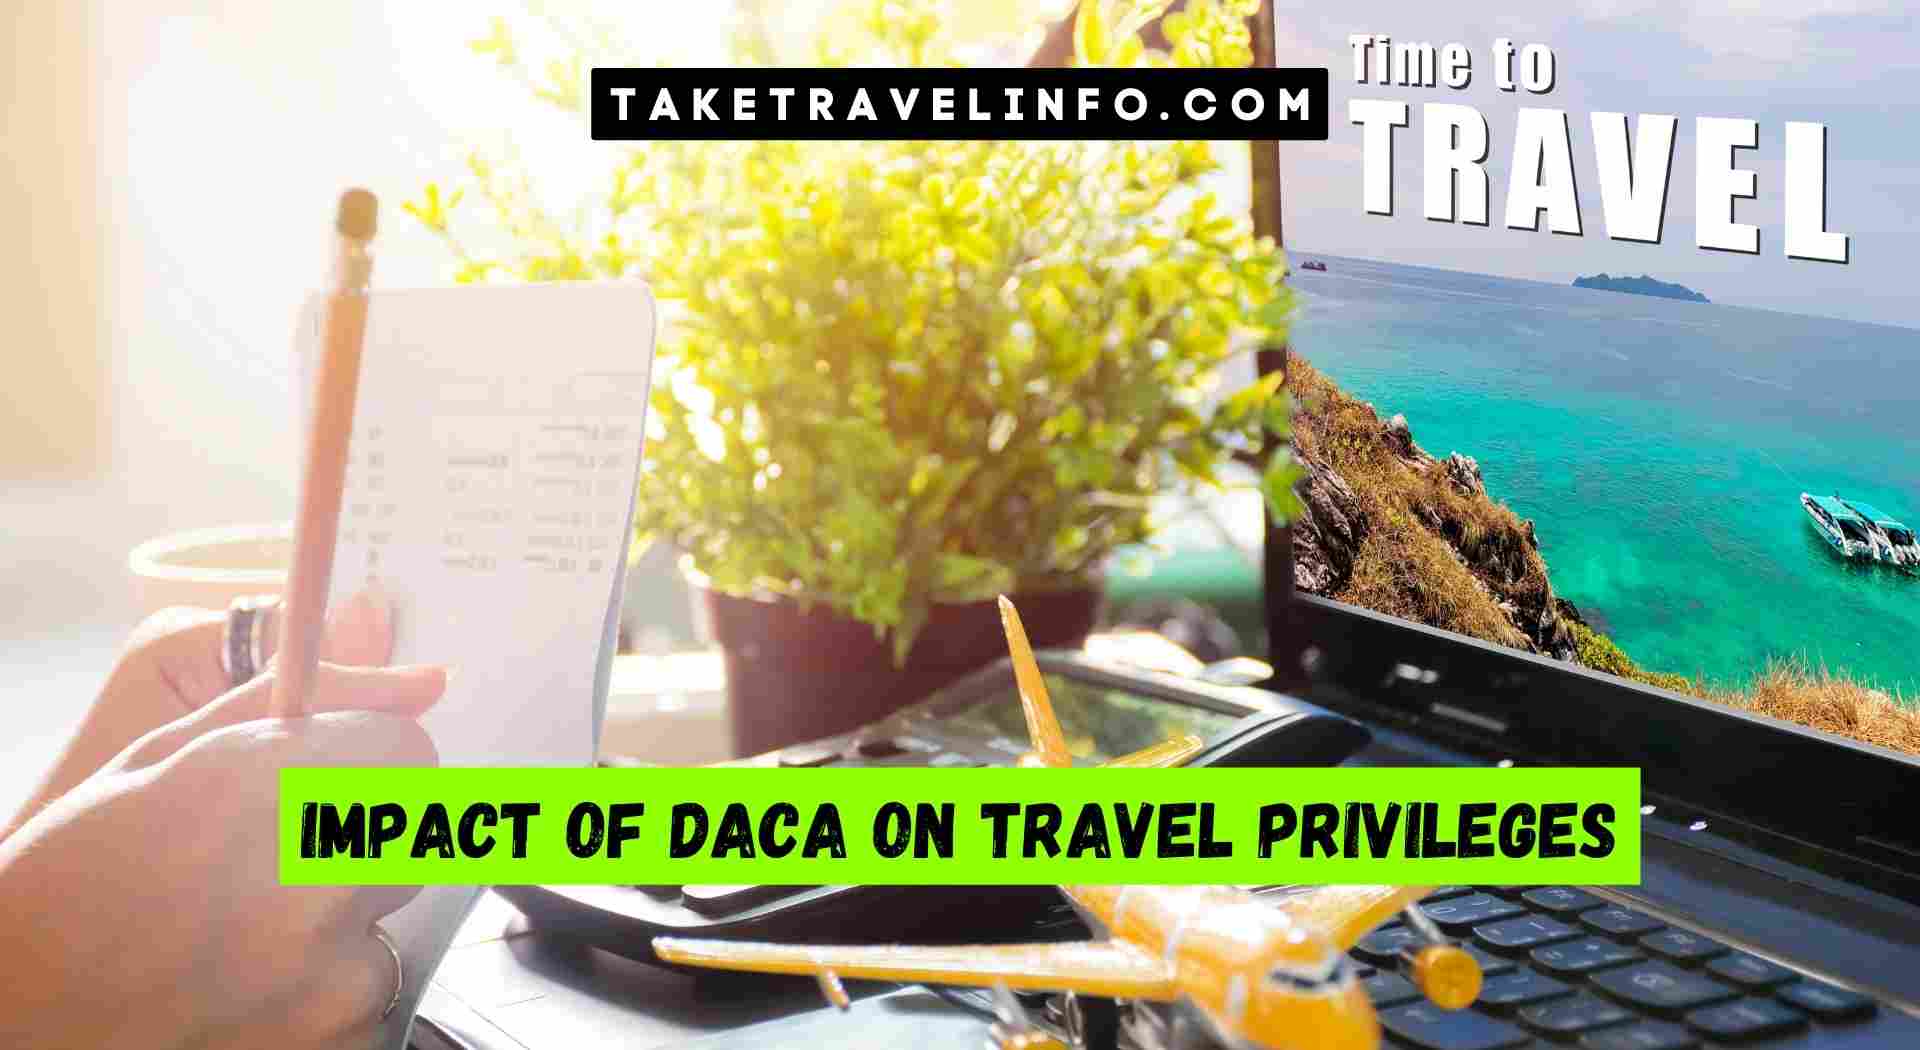 Can Daca Recipients Travel To Hawaii?